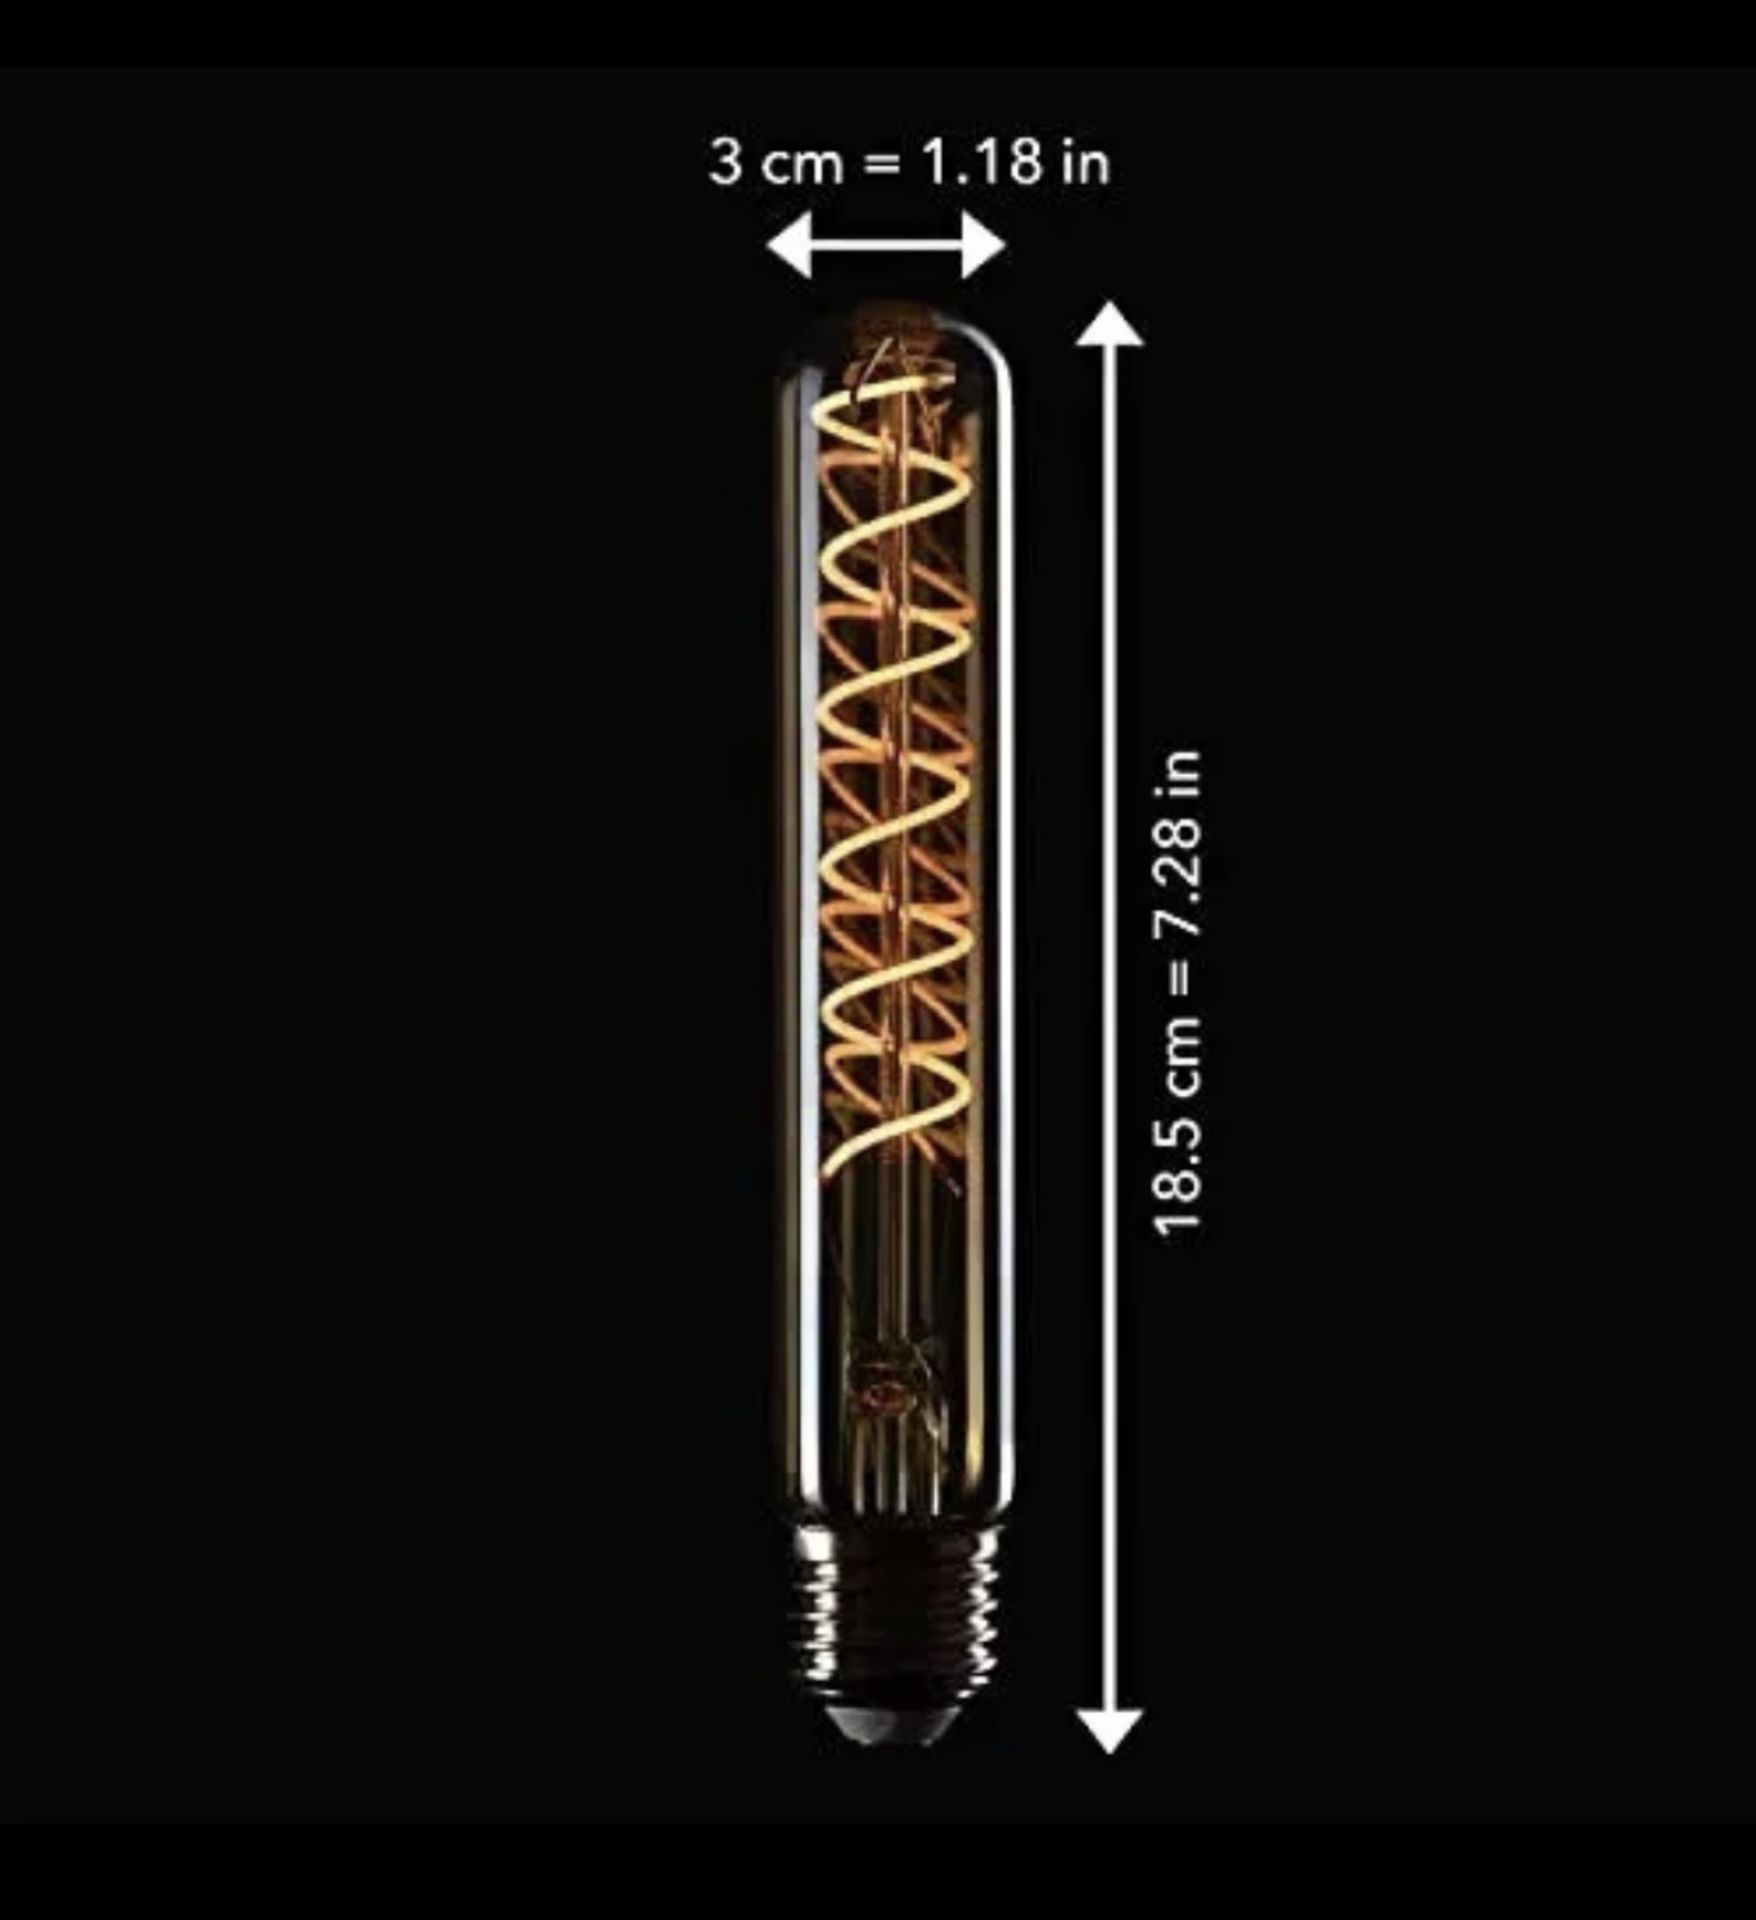 24 x CROWN LED Edison Flat Pipe Lightbulb 4W/40W Warm White - NEW & BOXED - BIG RRP! - Image 6 of 8